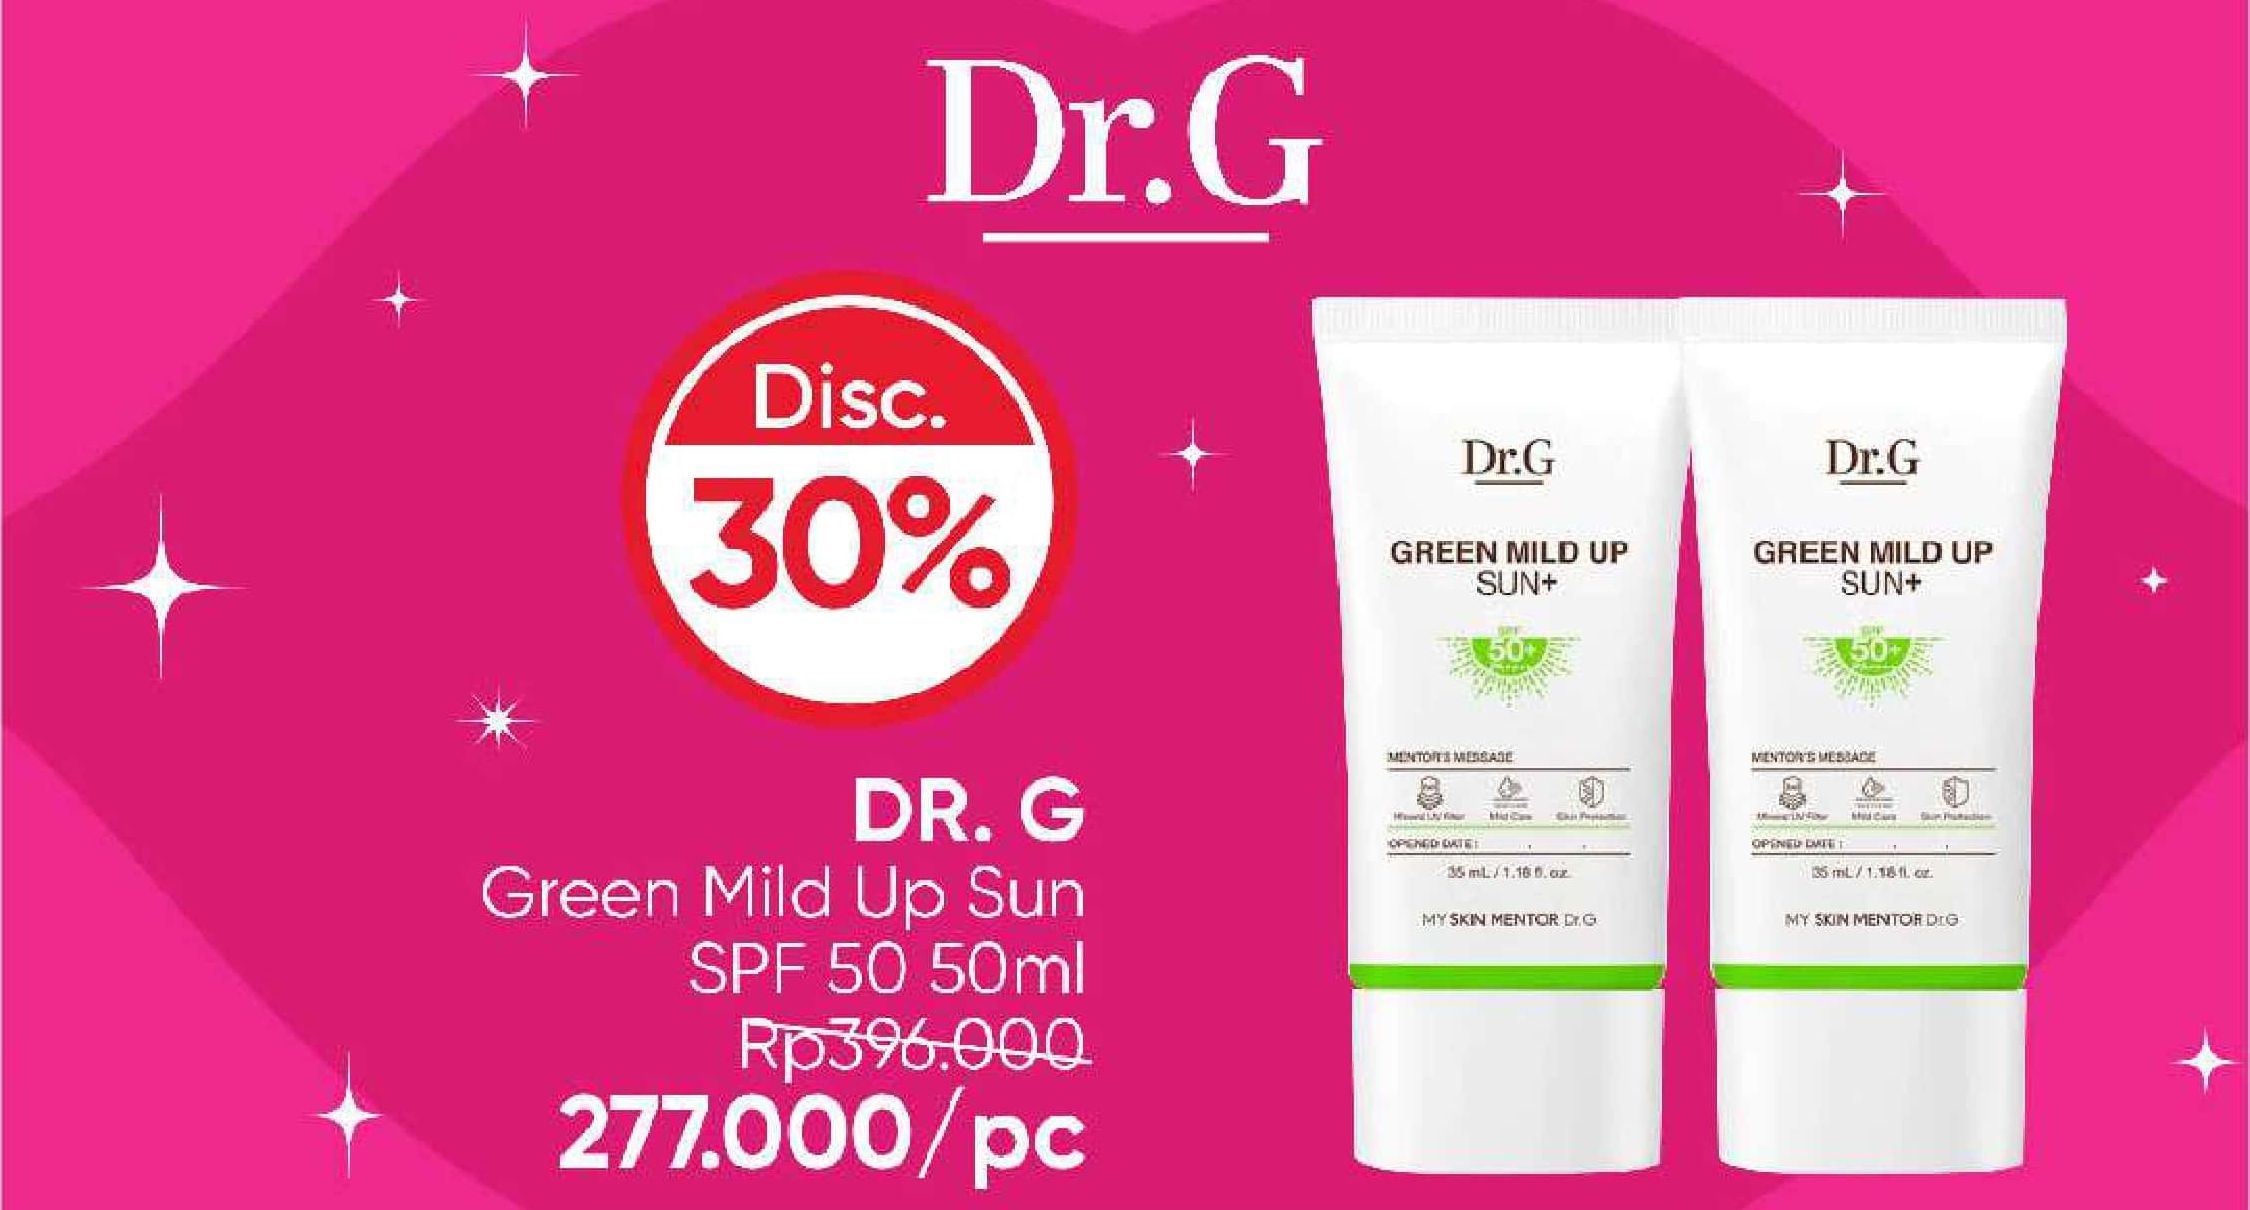 Dr. G Green Mild Up Sun SPF 50